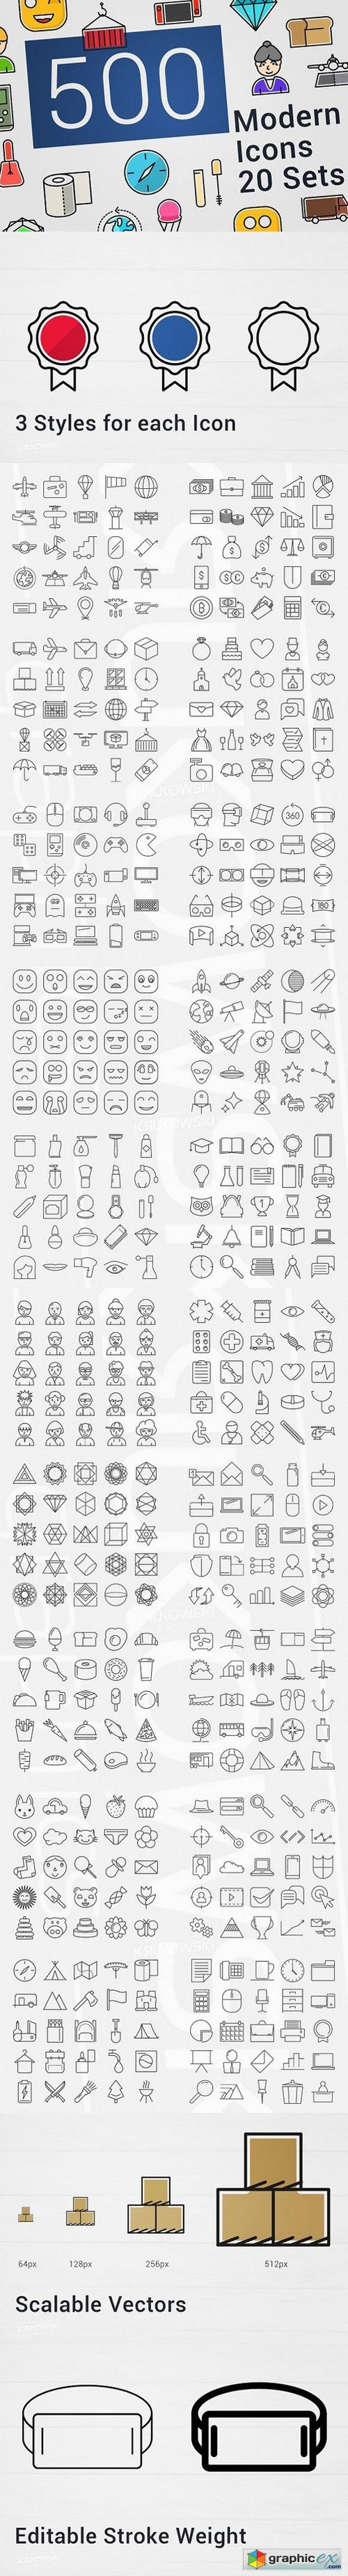 500 Modern Icons Bundle